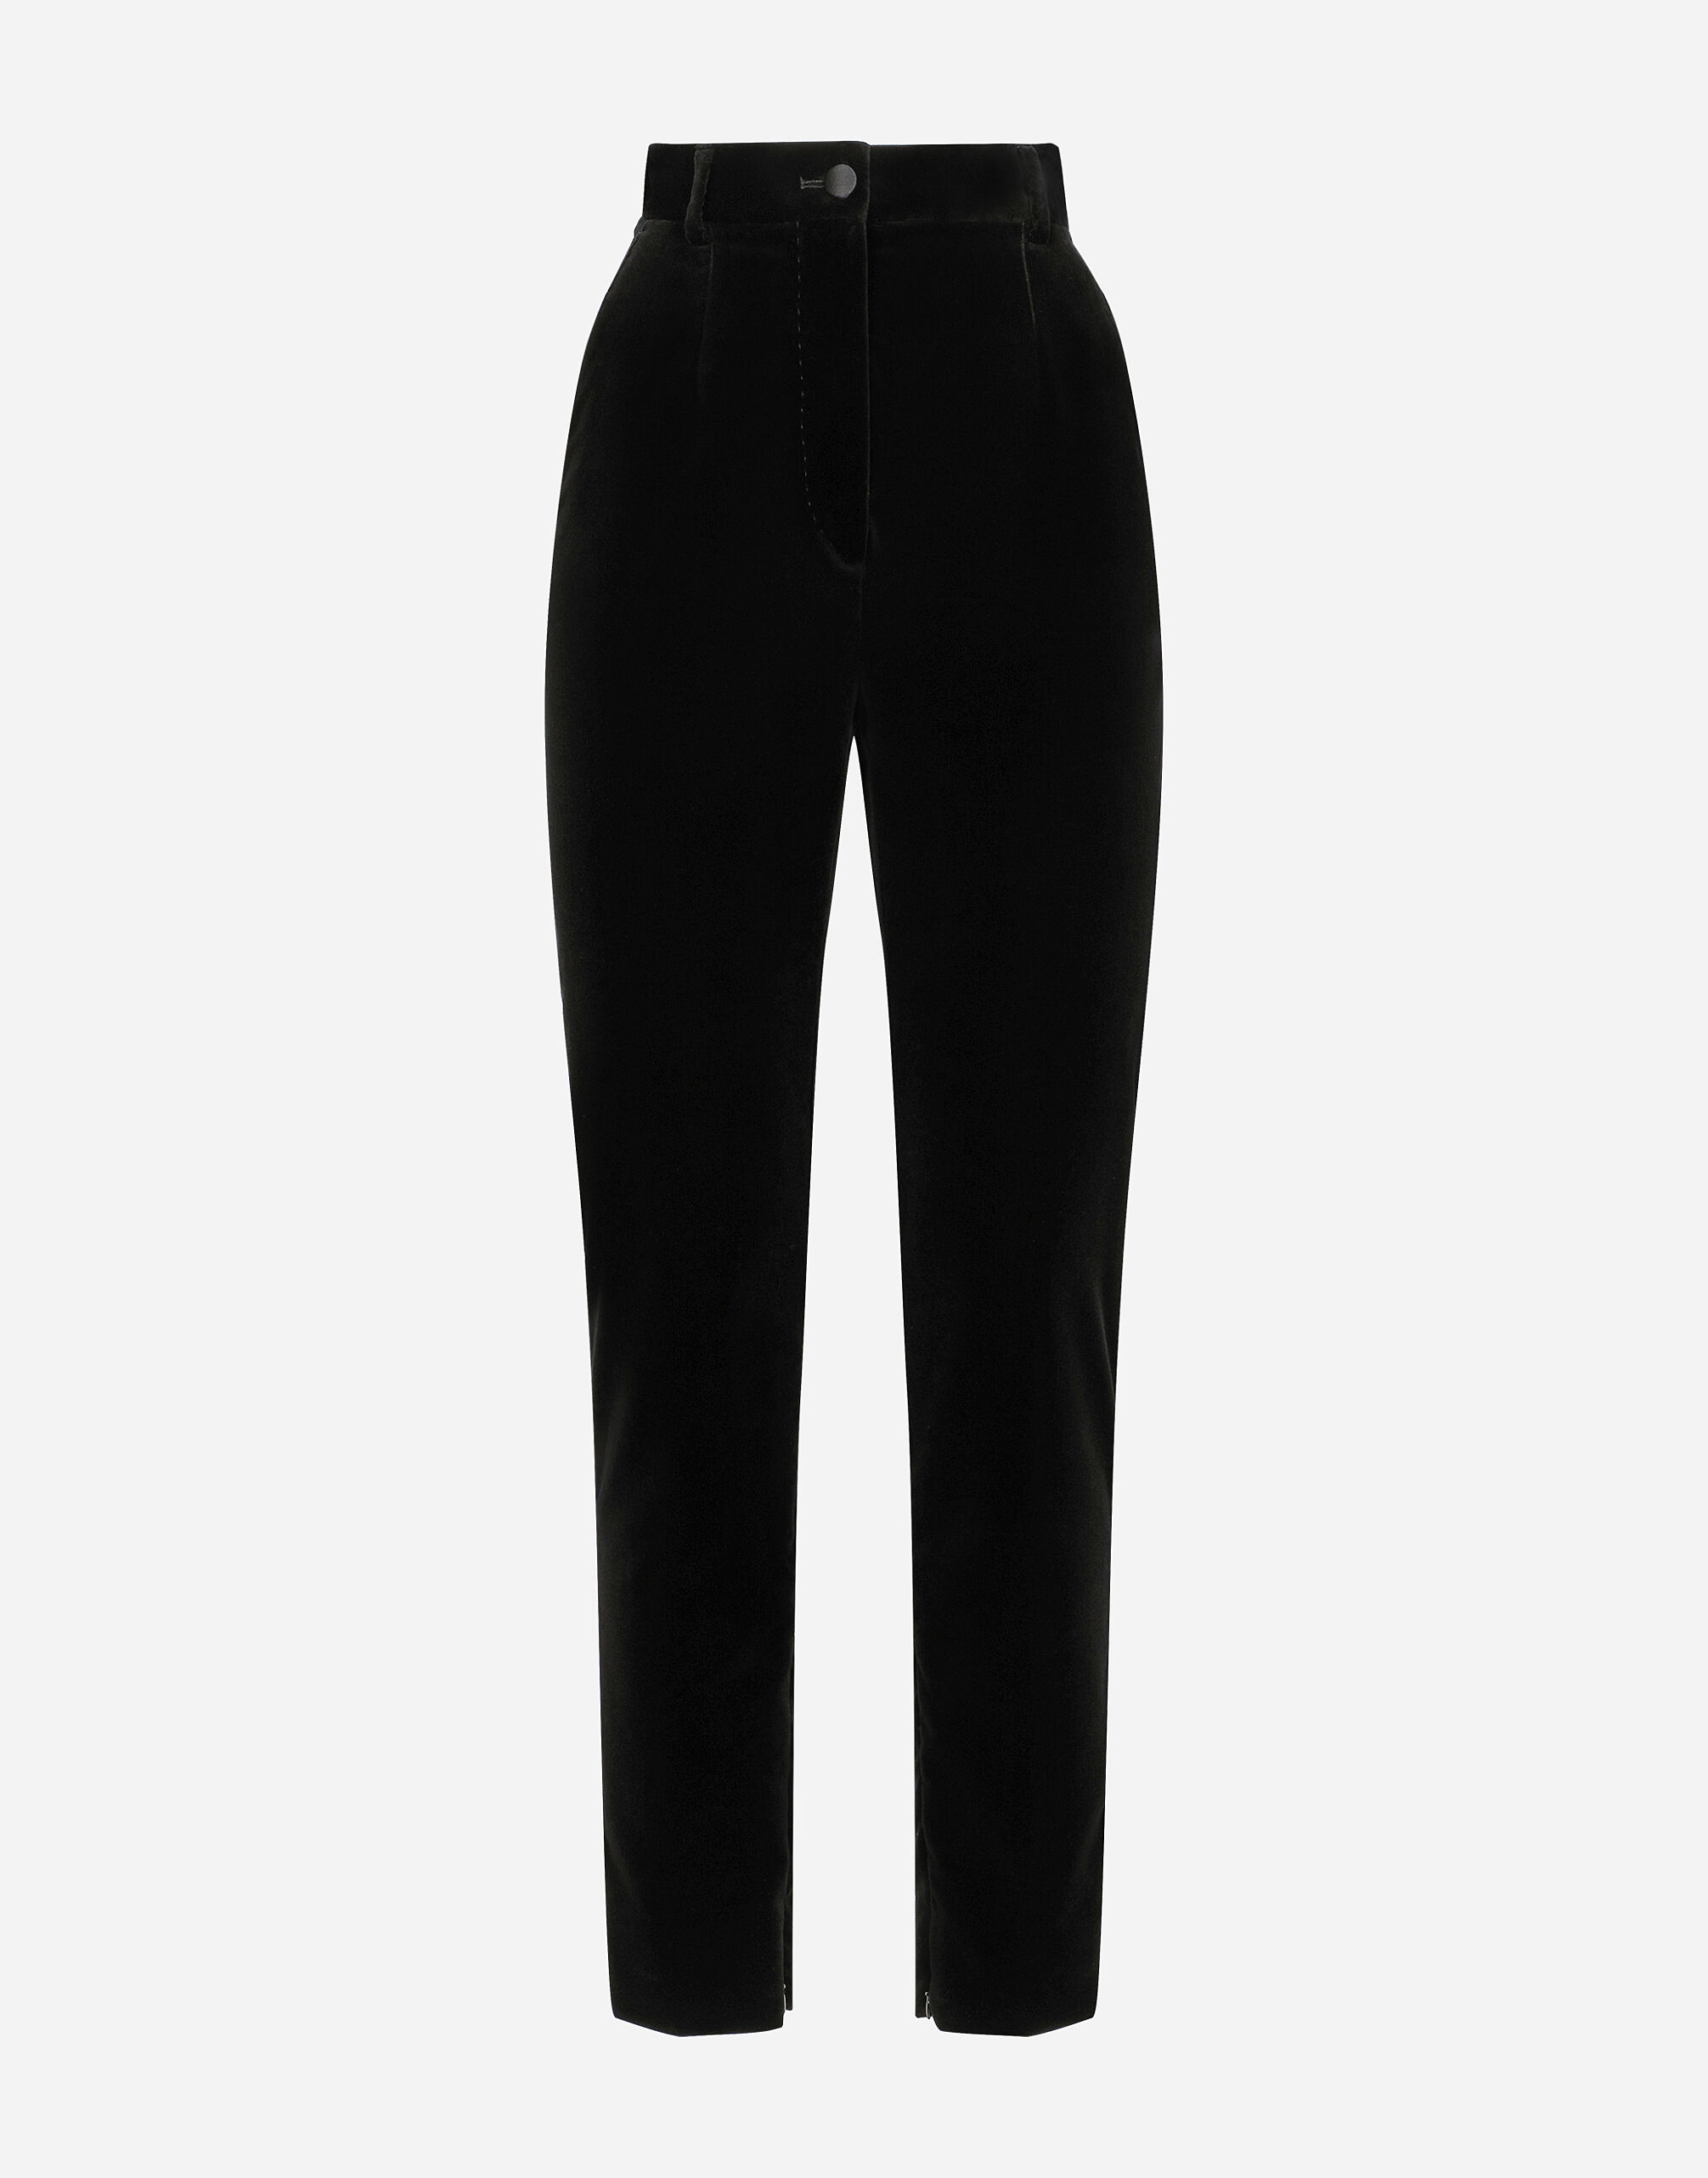 Buy Black Trousers & Pants for Women by GLOBUS Online | Ajio.com